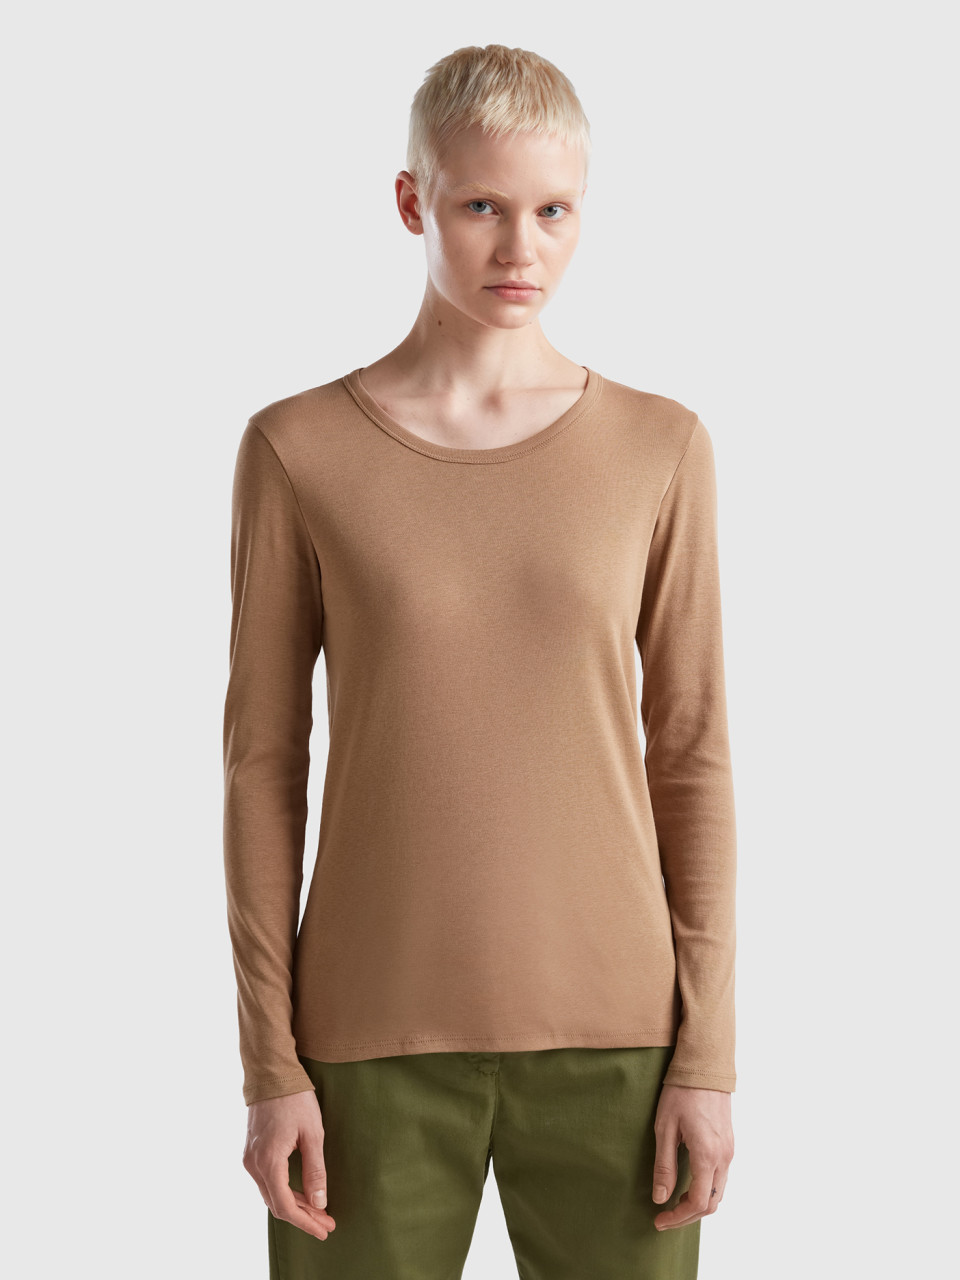 Benetton, Long Sleeve Pure Cotton T-shirt, Camel, Women